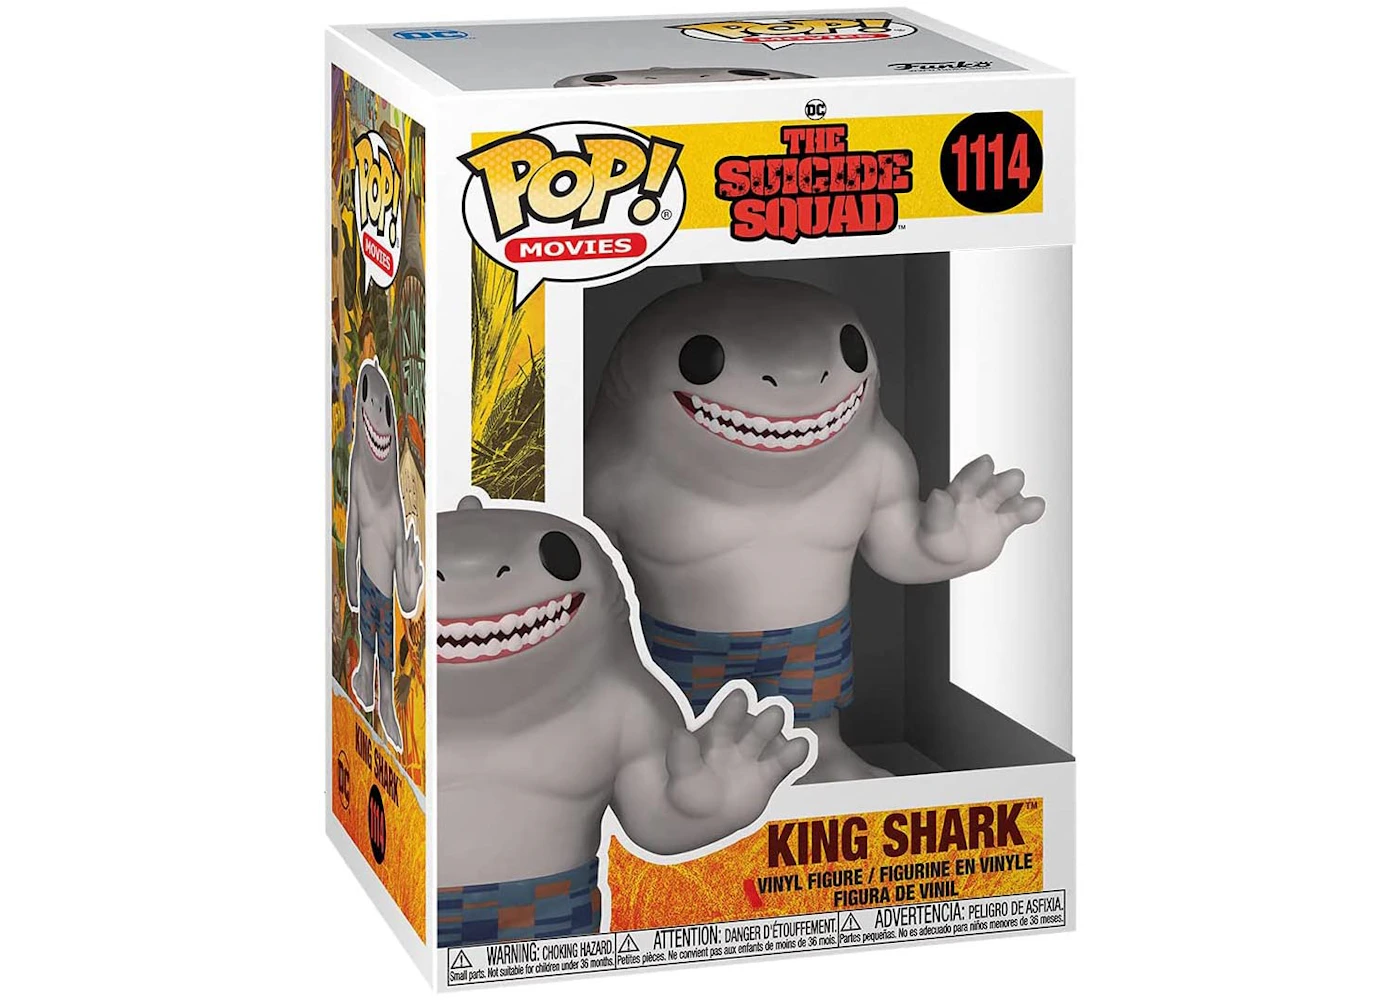 King shark suicide squad